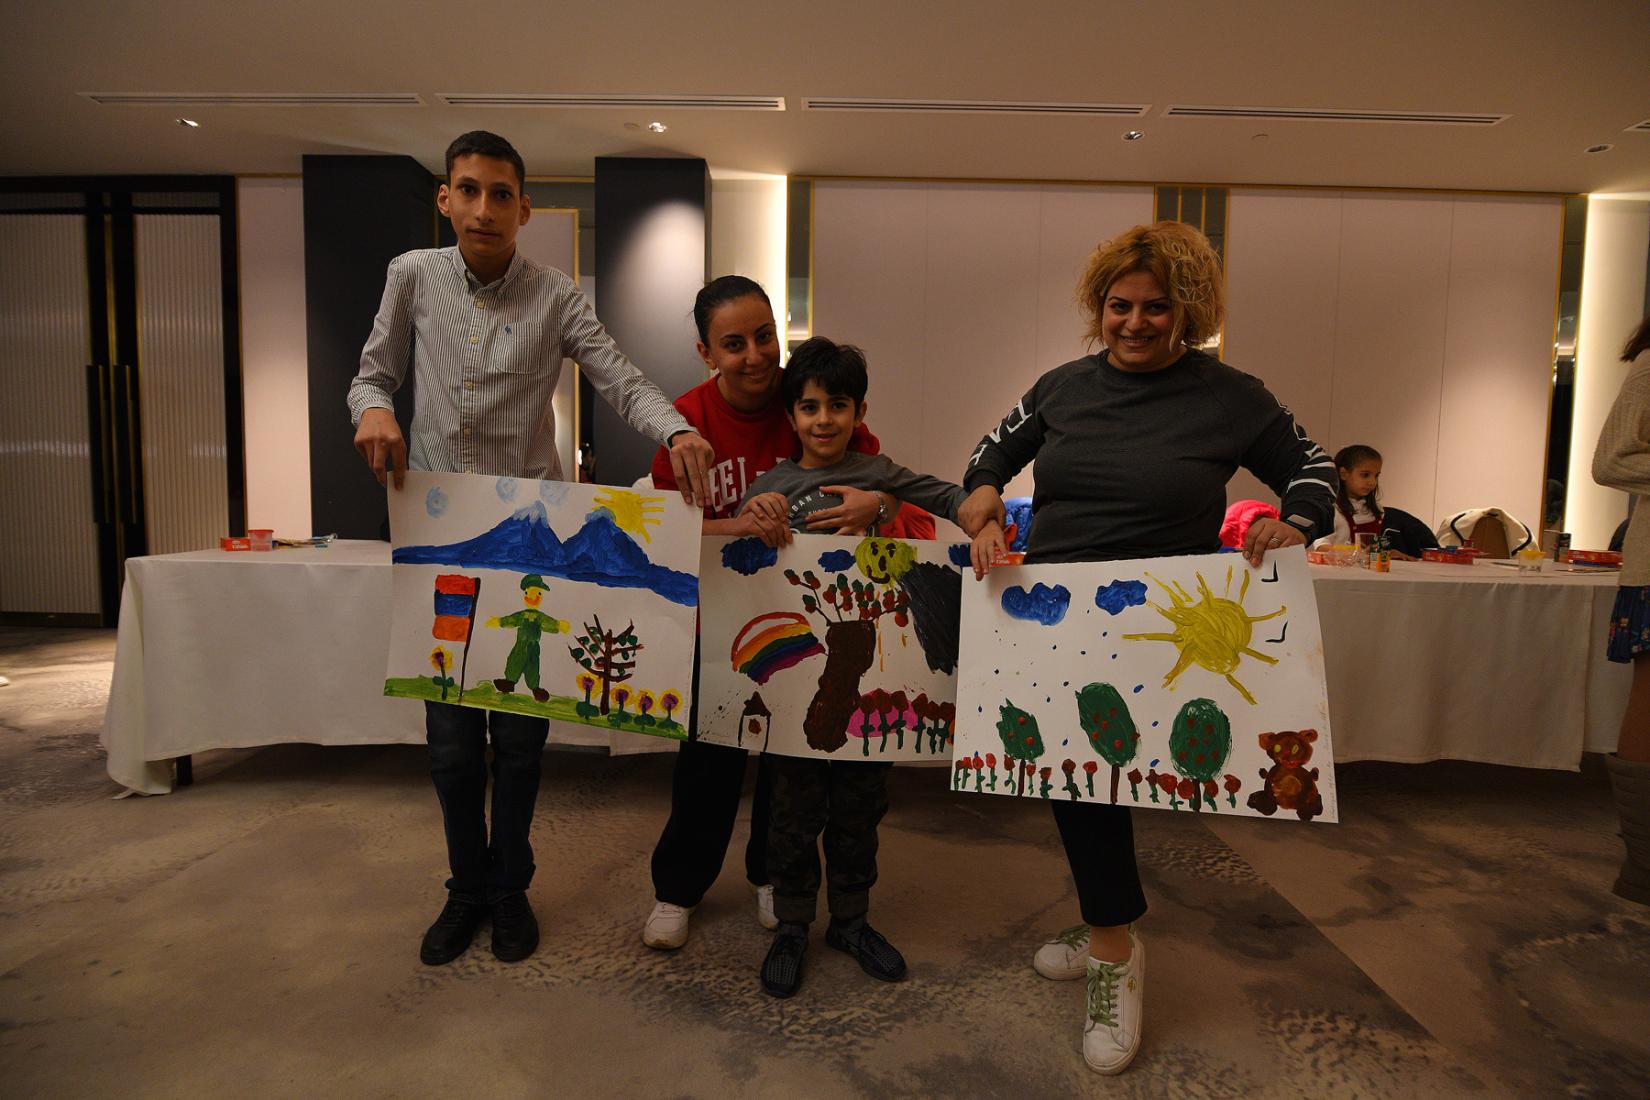 Kids show their artwork.